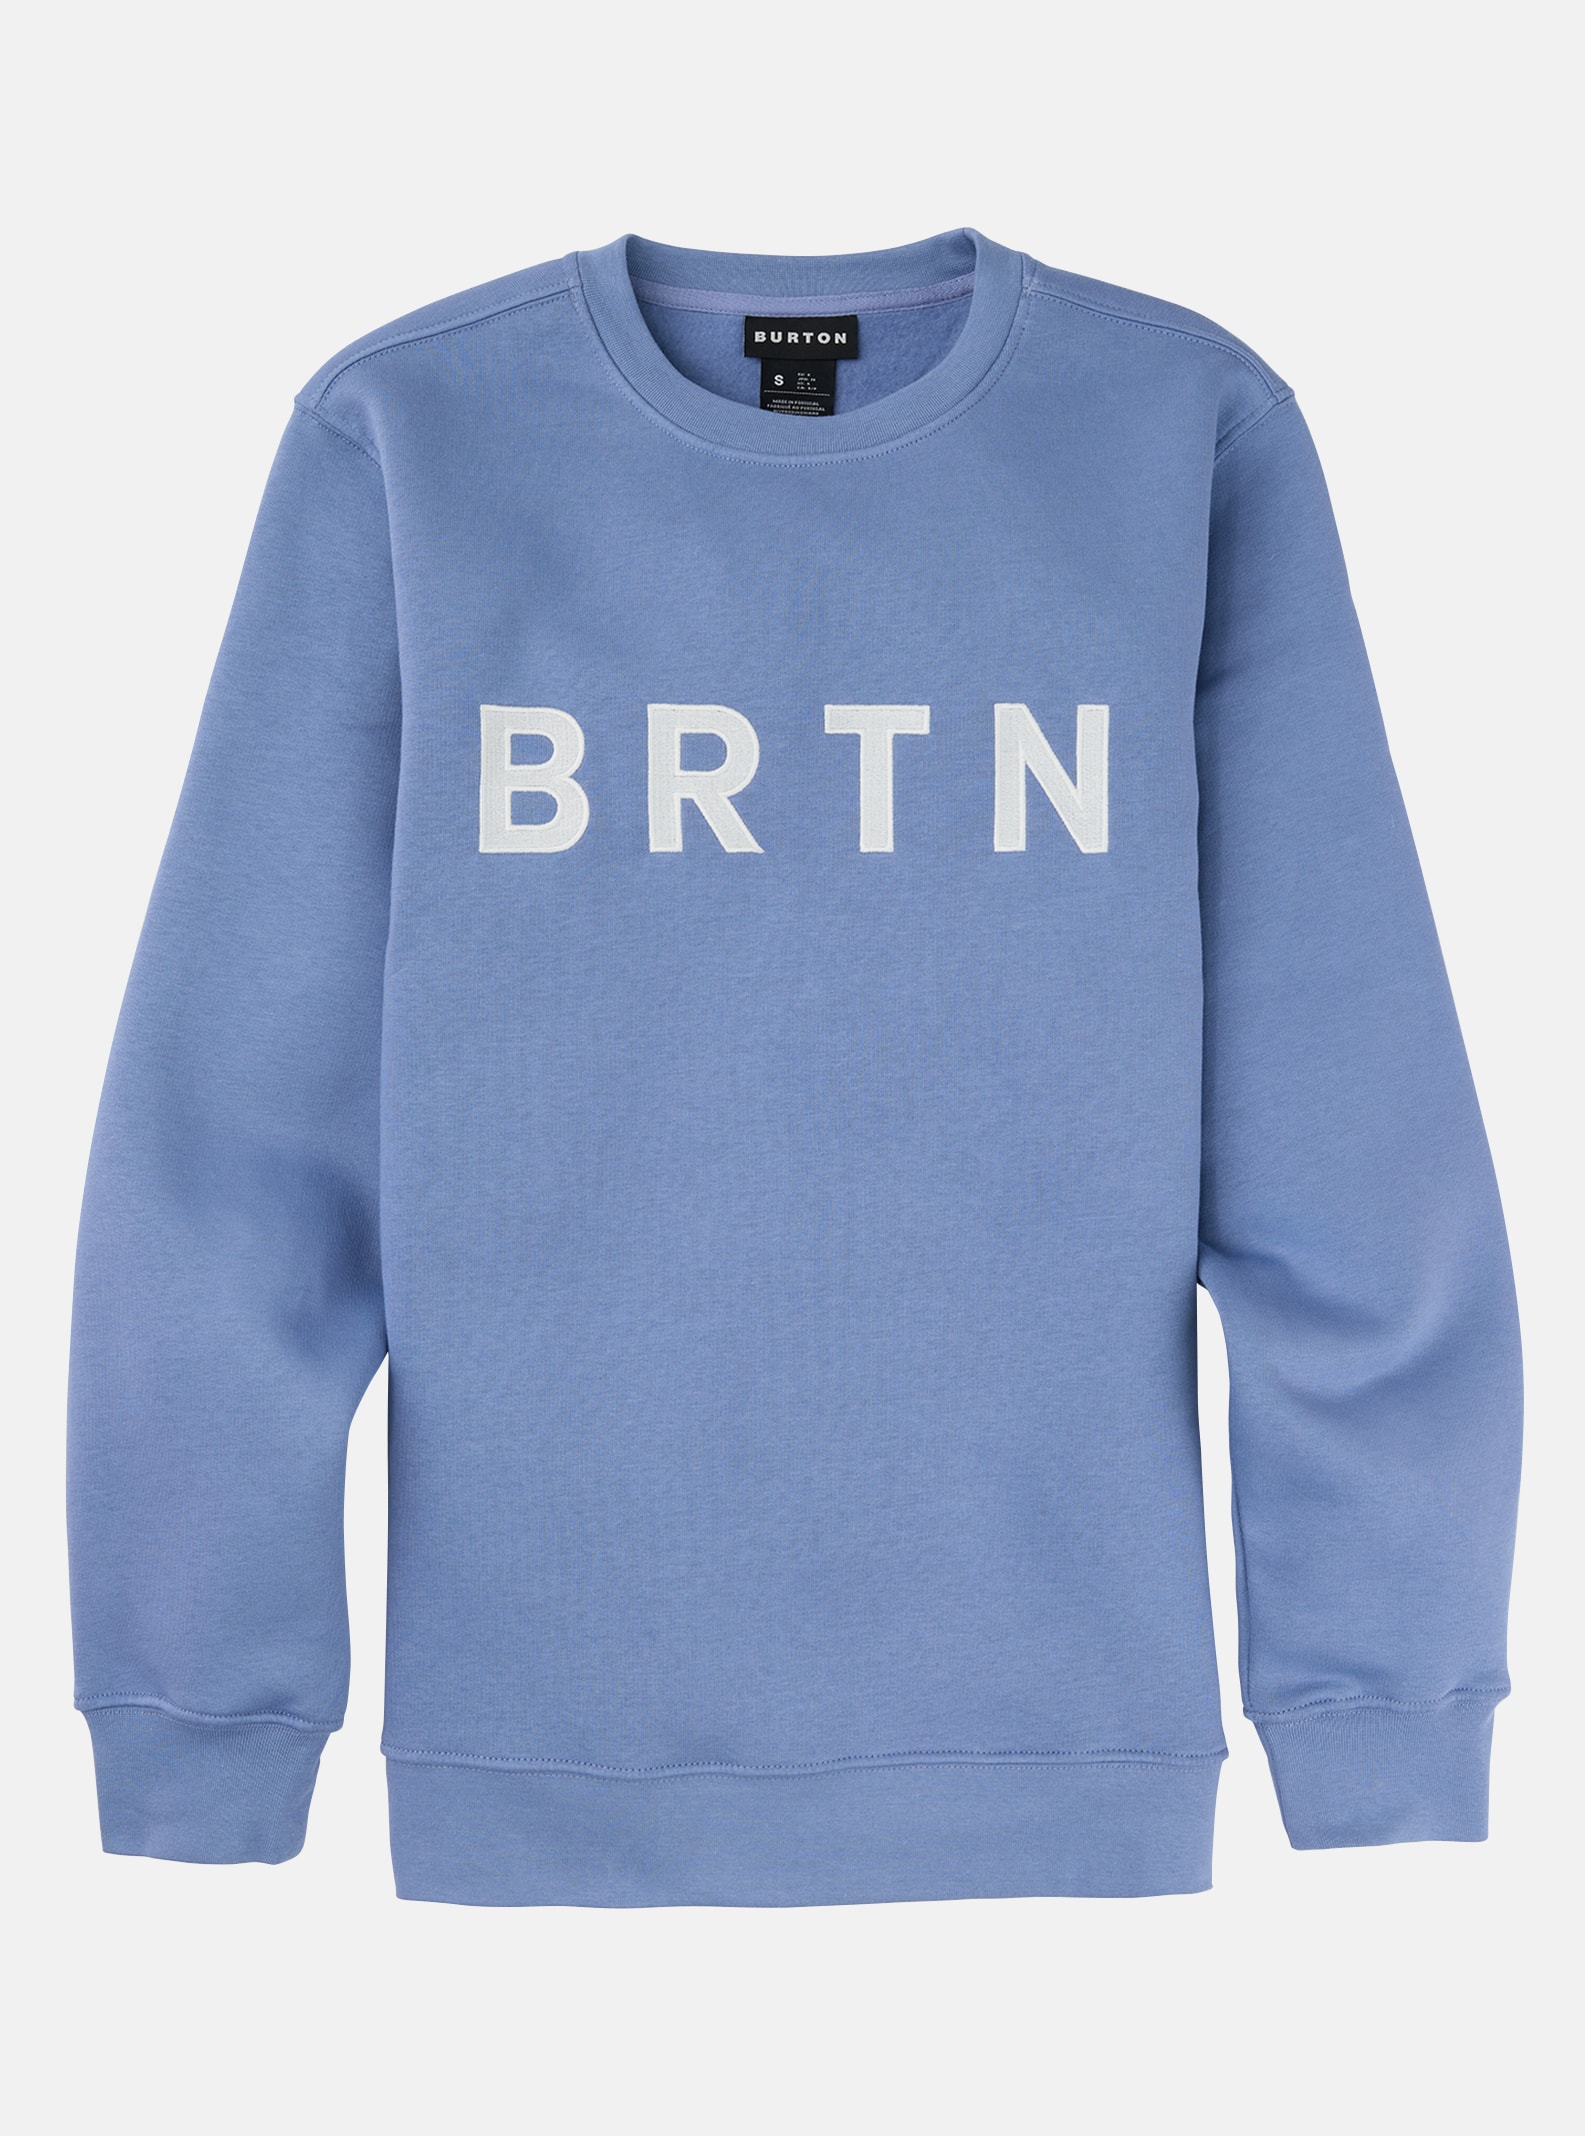 Burton Sweatshirt - BRTN Crewneck, Slate Blue, XS